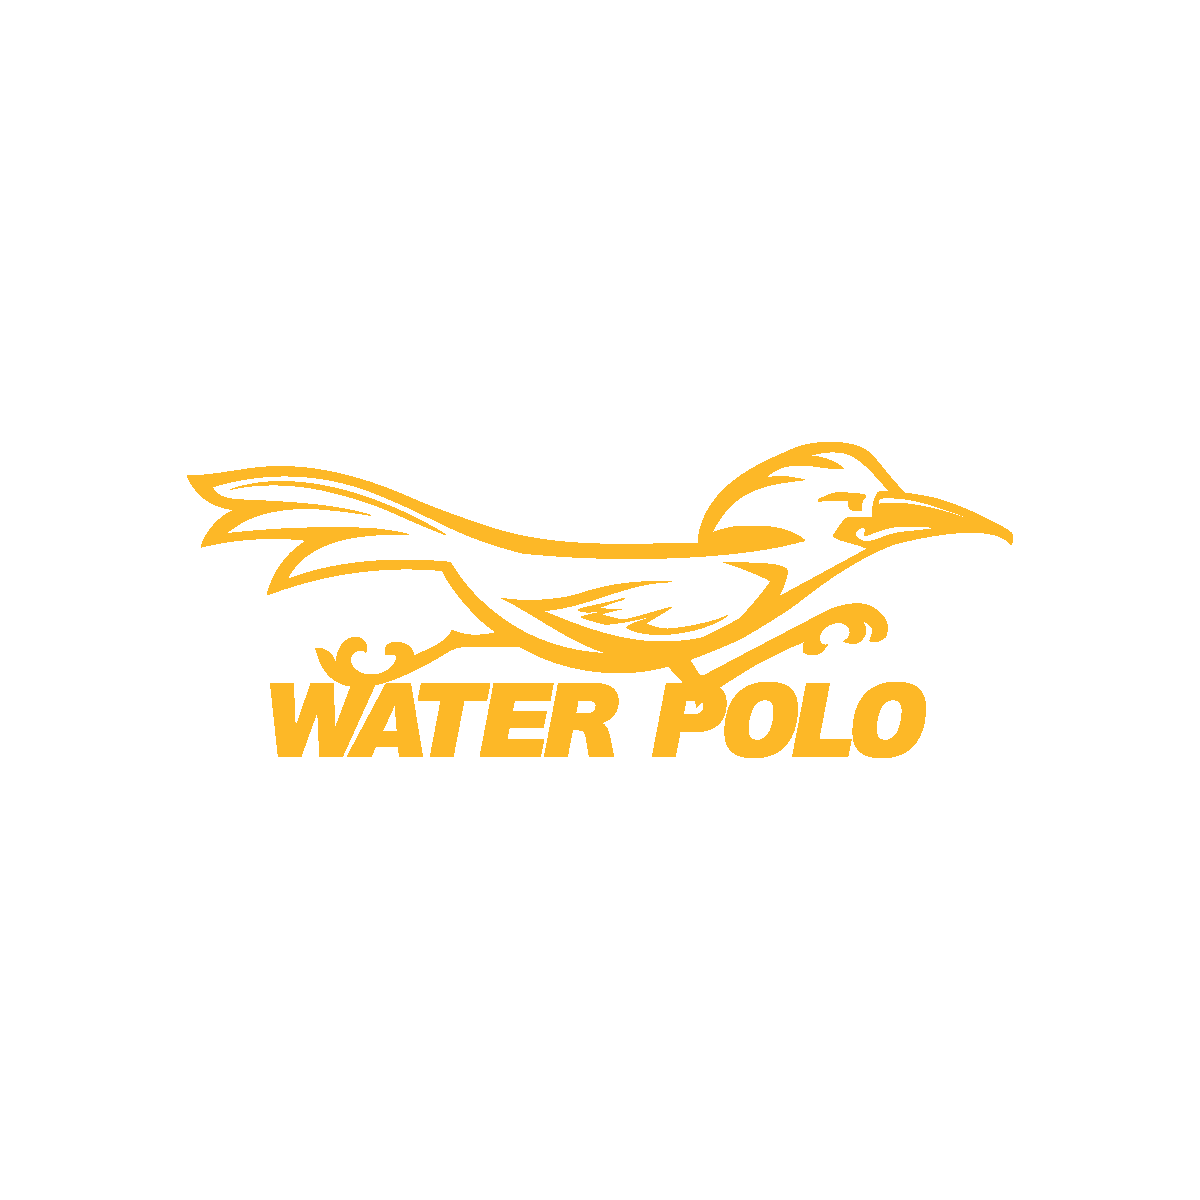 Water Polo mascot - yellow